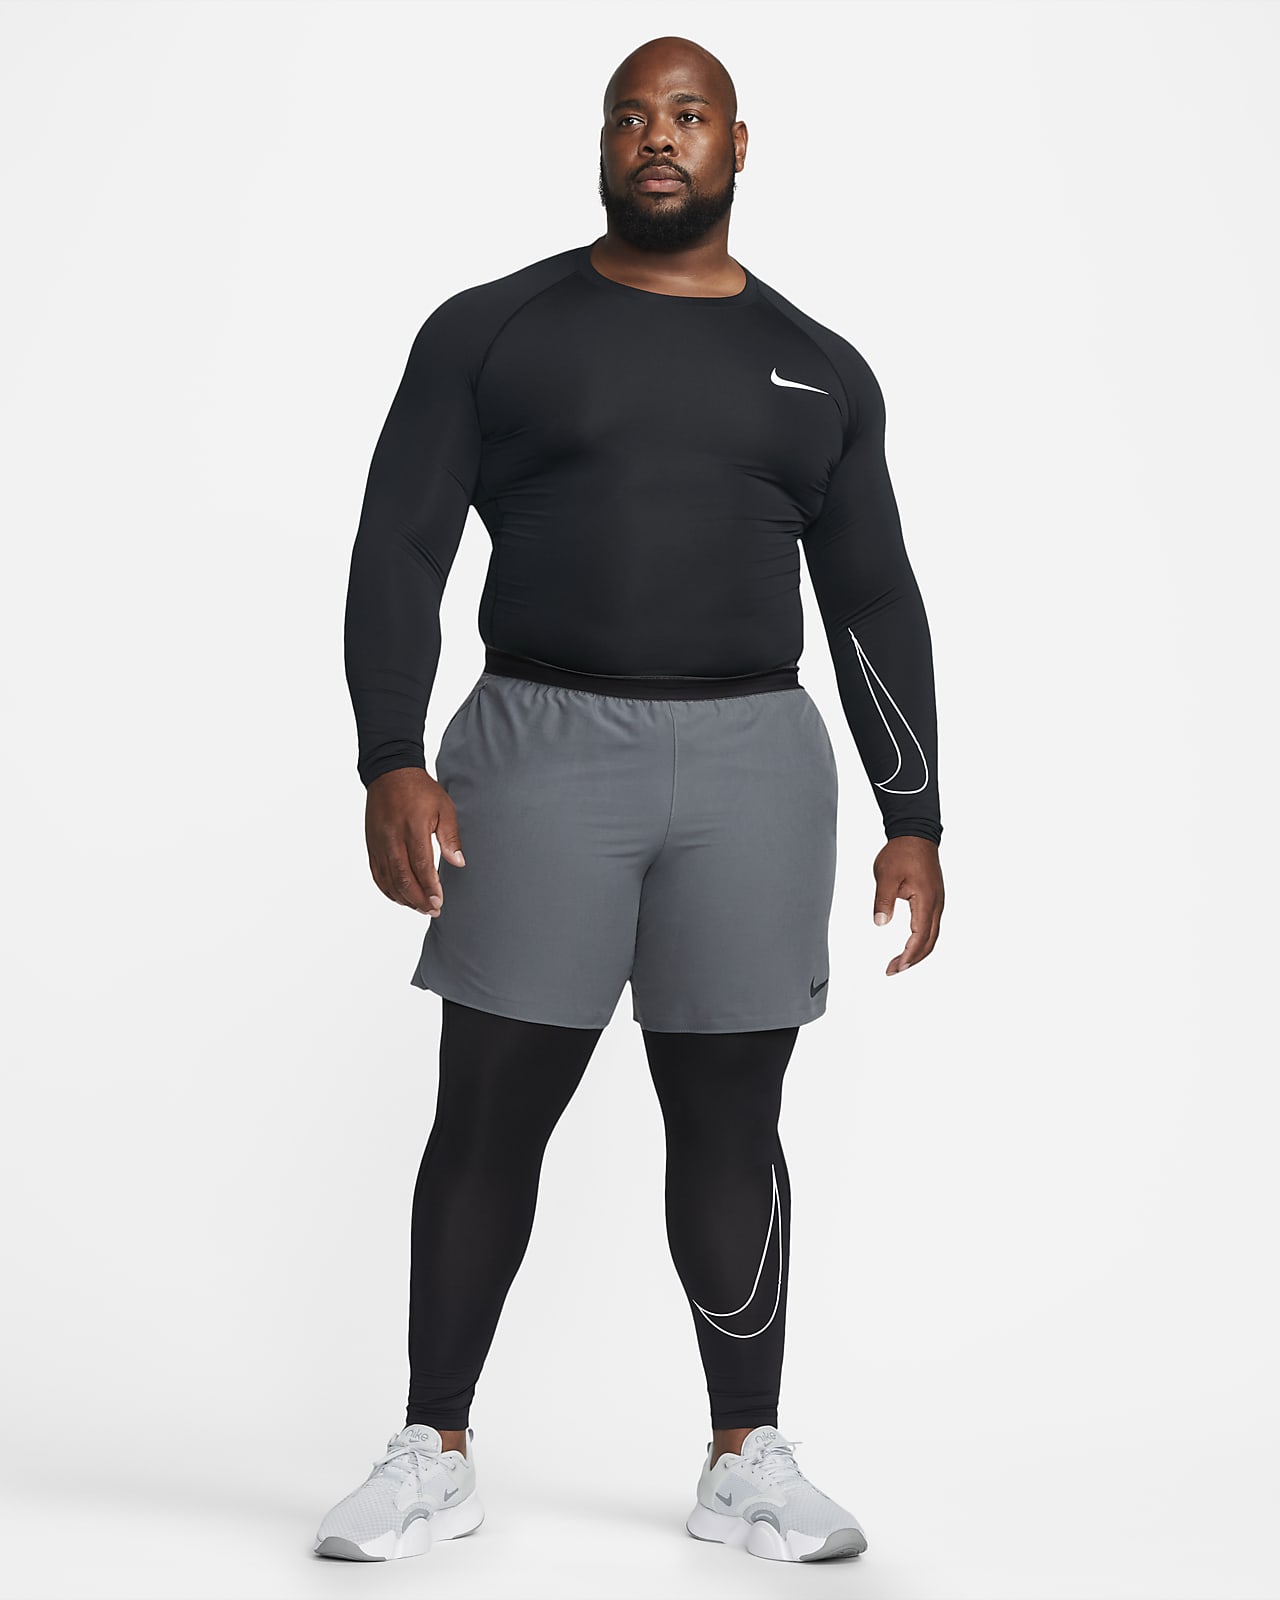 Taalkunde opslaan Beperken Nike Pro Dri-FIT Men's Tight Fit Long-Sleeve Top. Nike.com